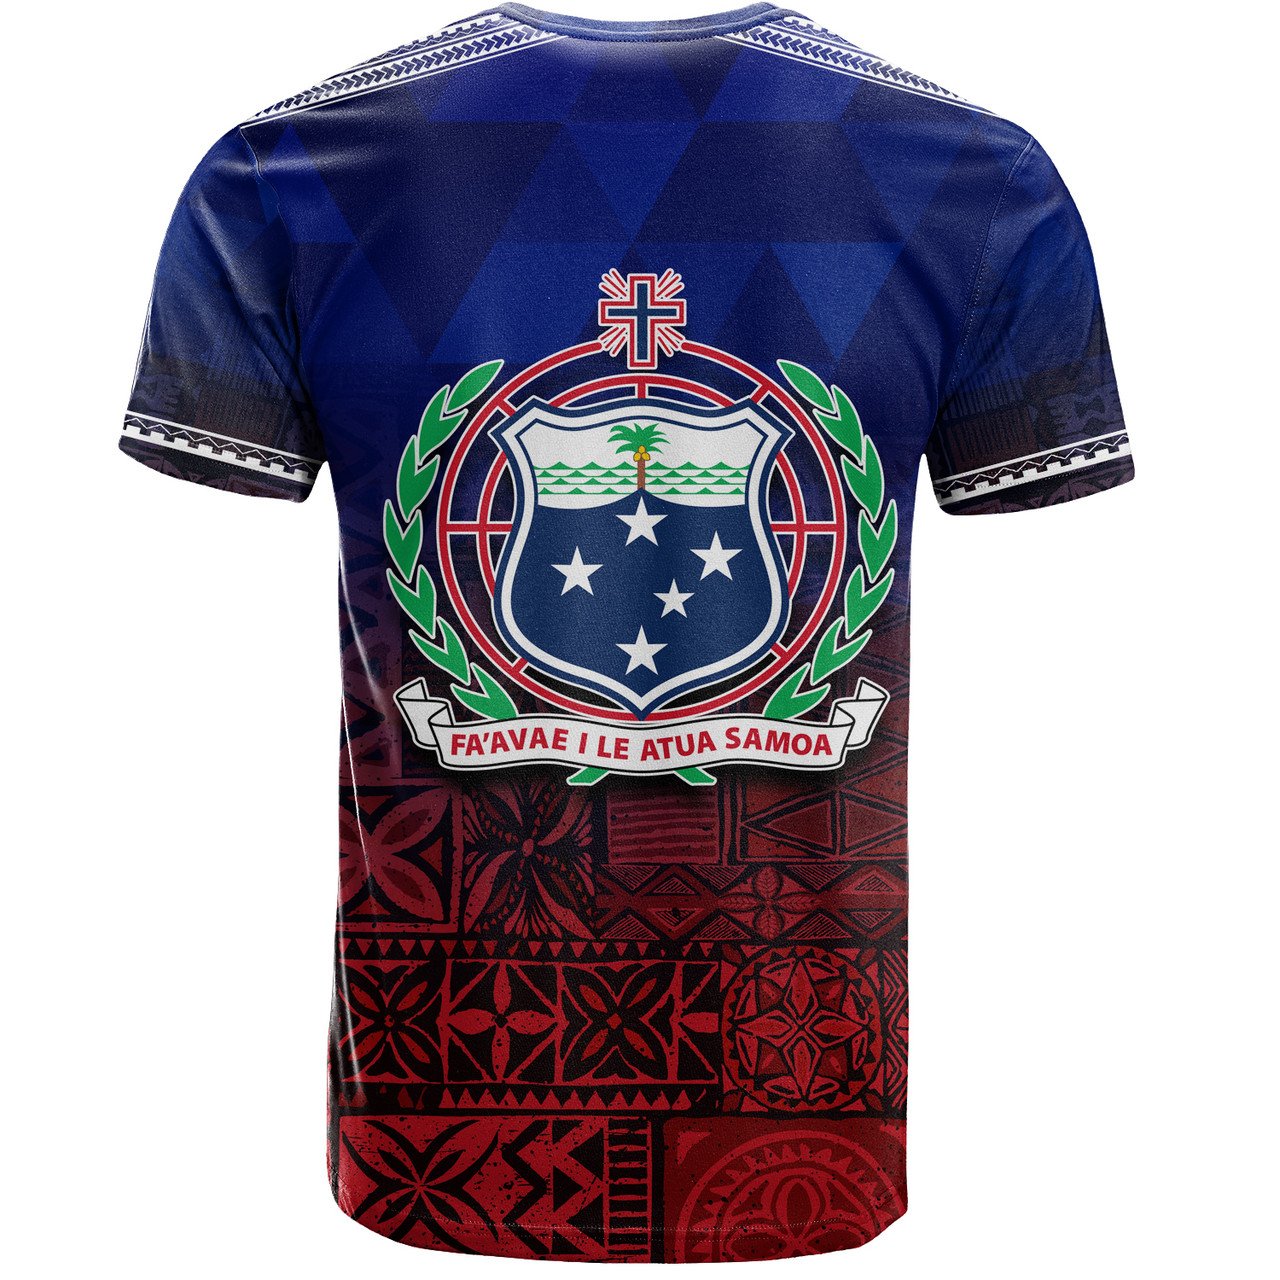 Samoa T-Shirt Lowpolly Pattern with Polynesian Motif